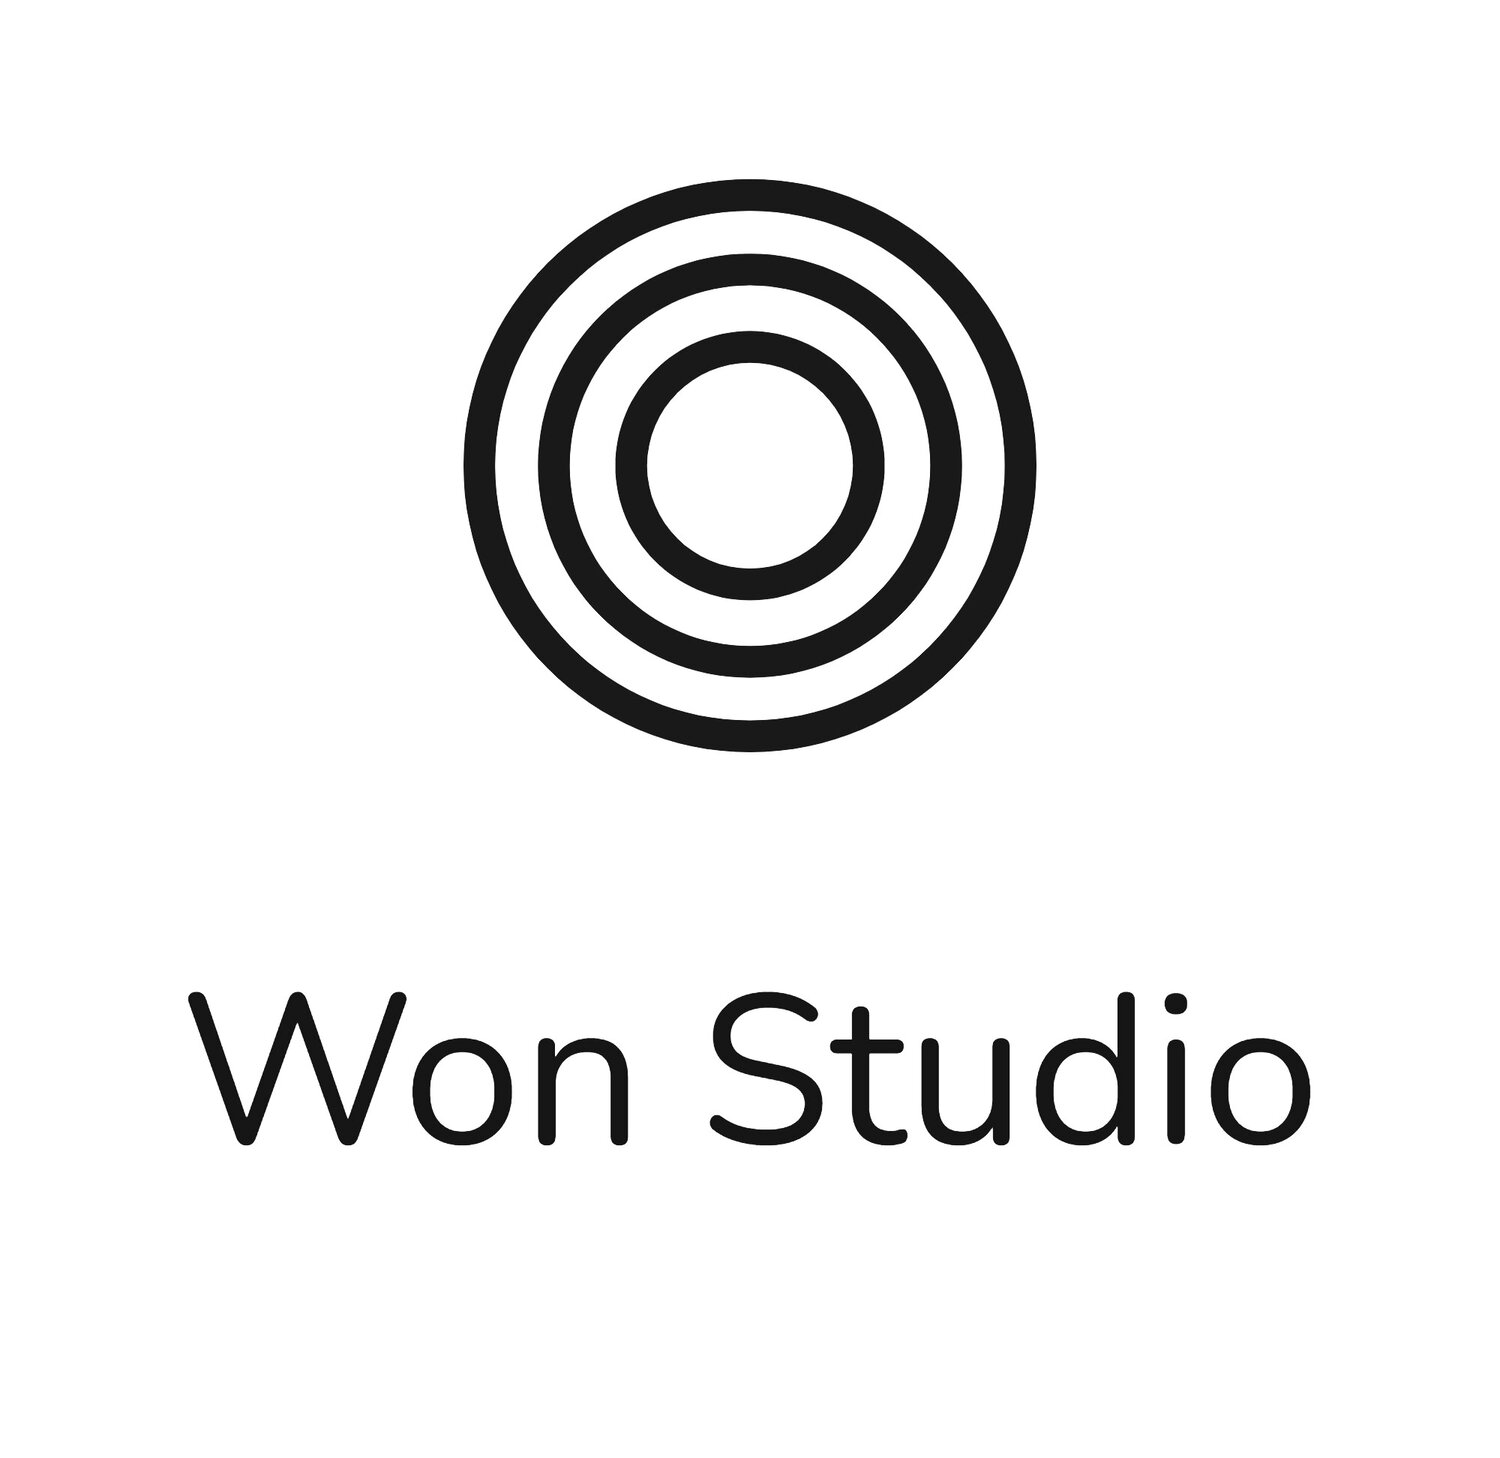  Won Studio